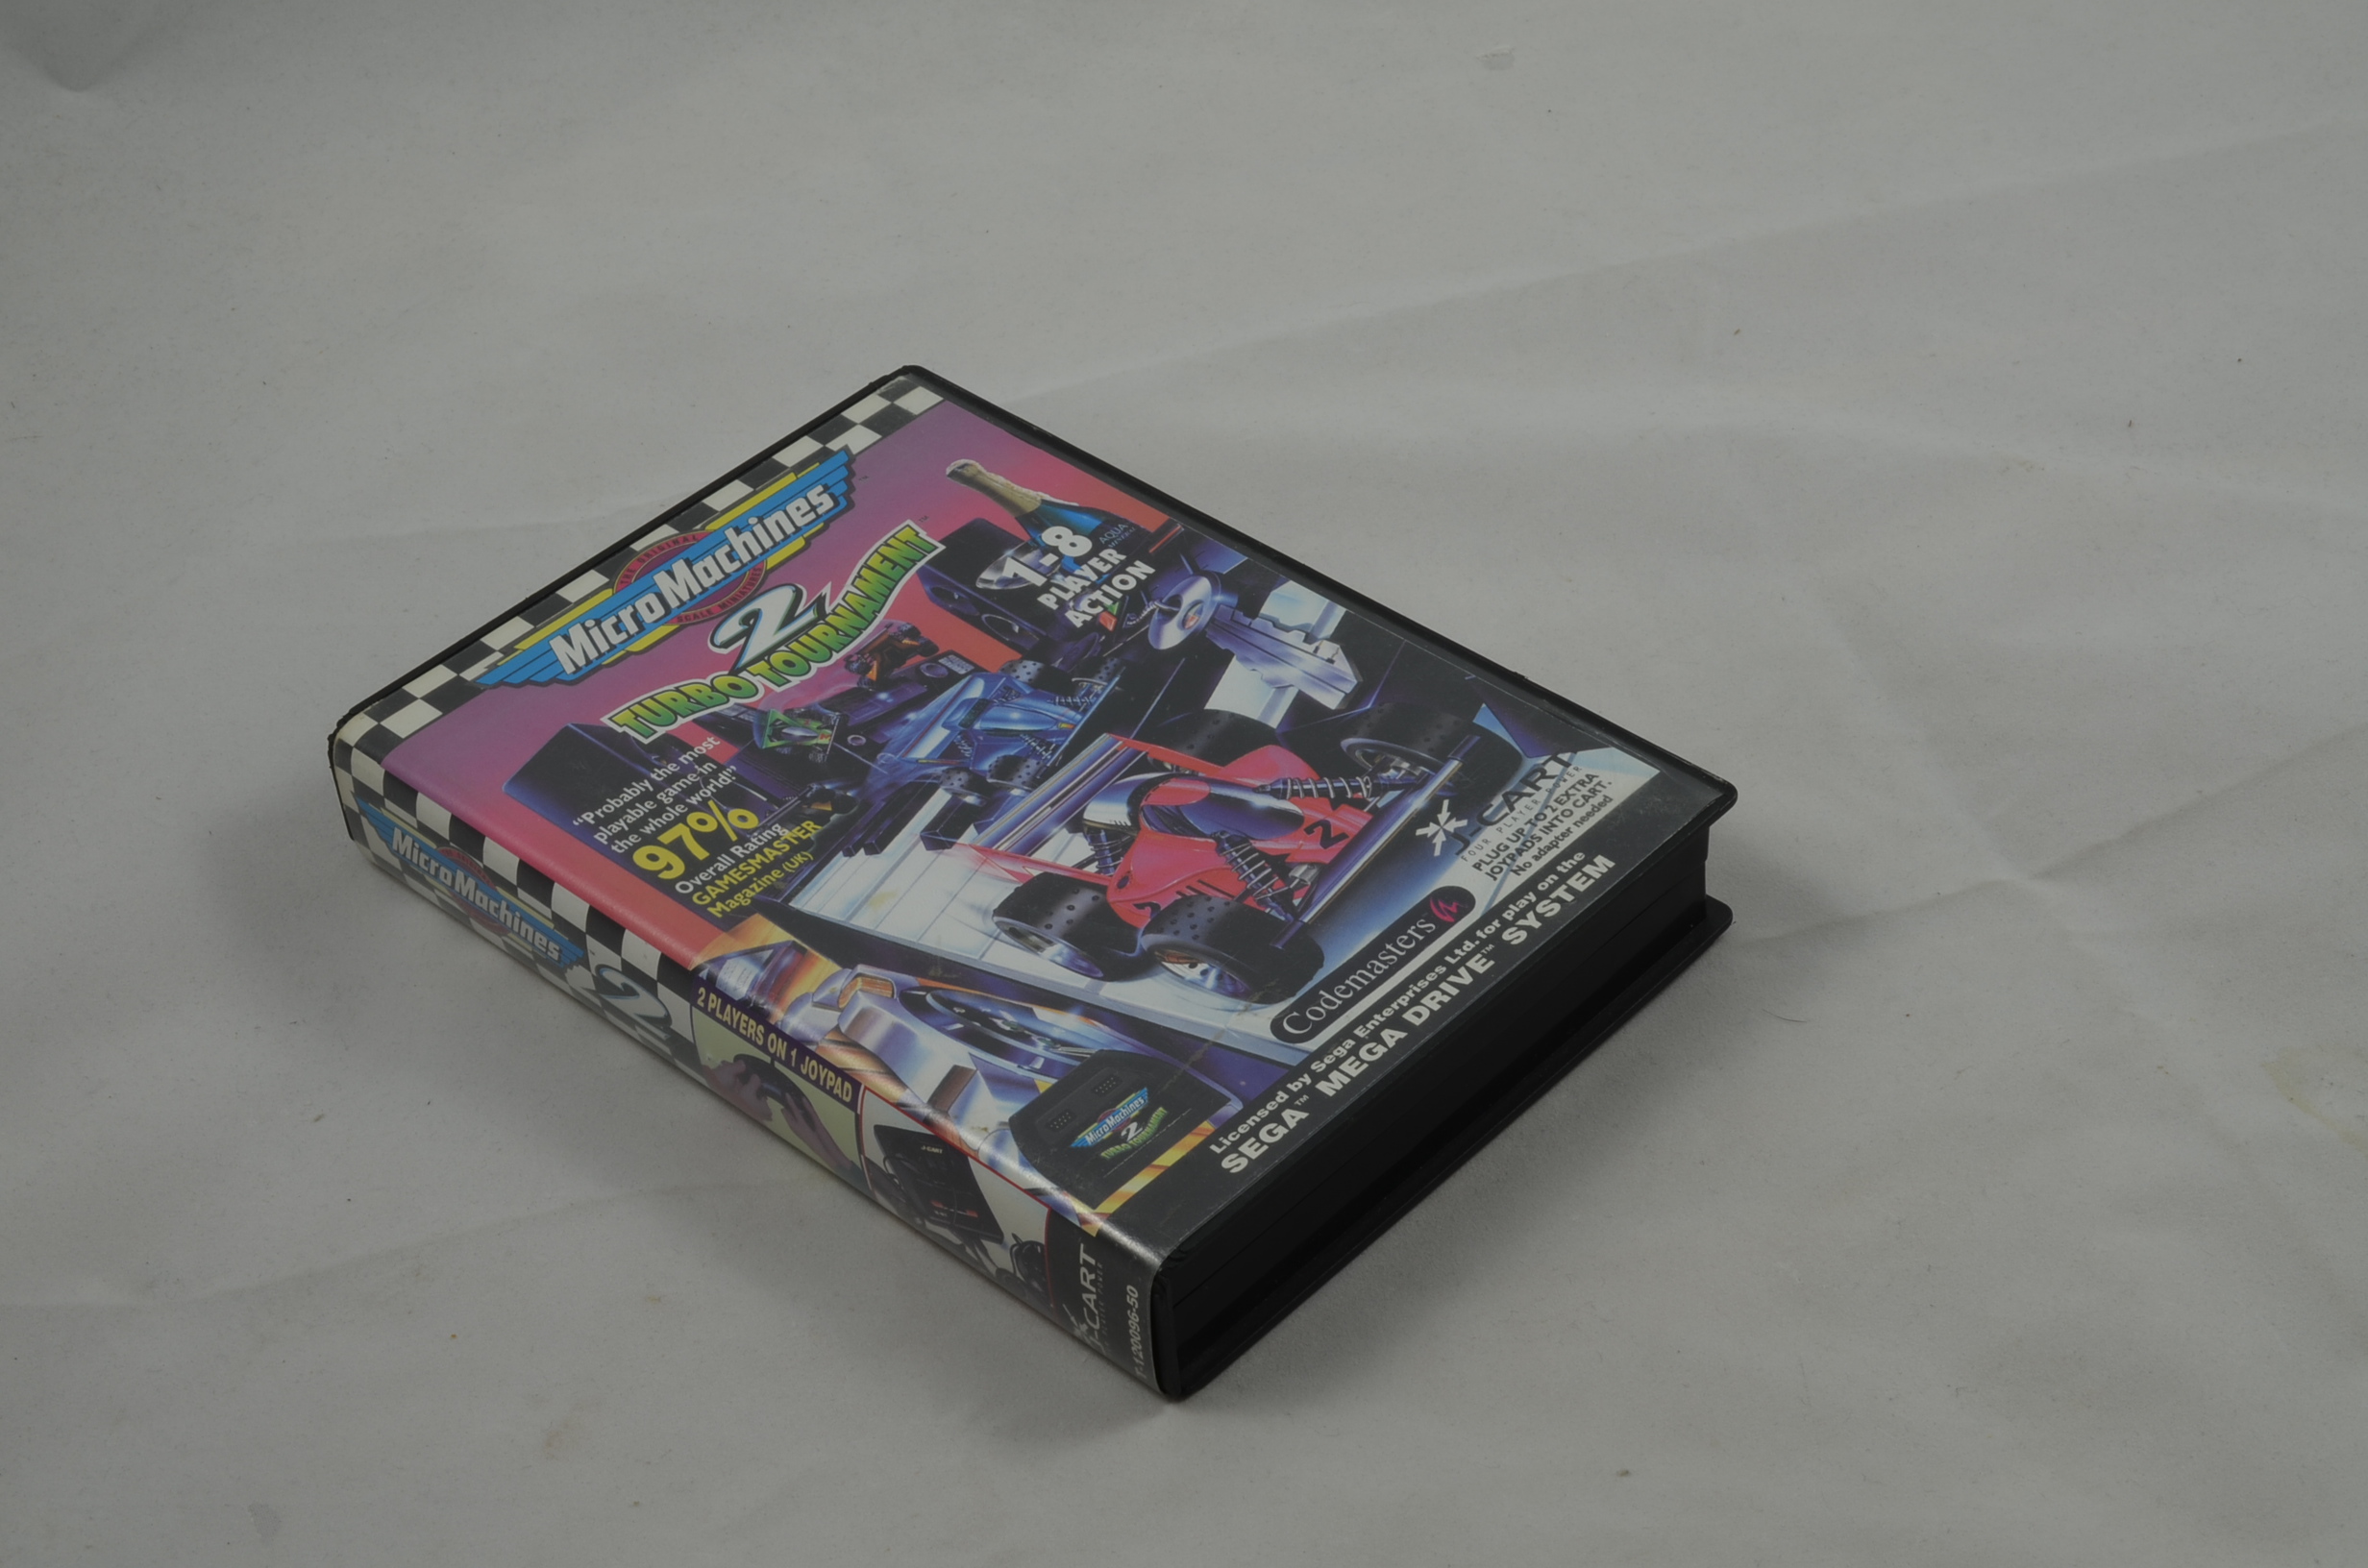 Produktbild von Micro Machines 2 Turbo Tournament Sega Mega Drive Spiel (sehr gut)